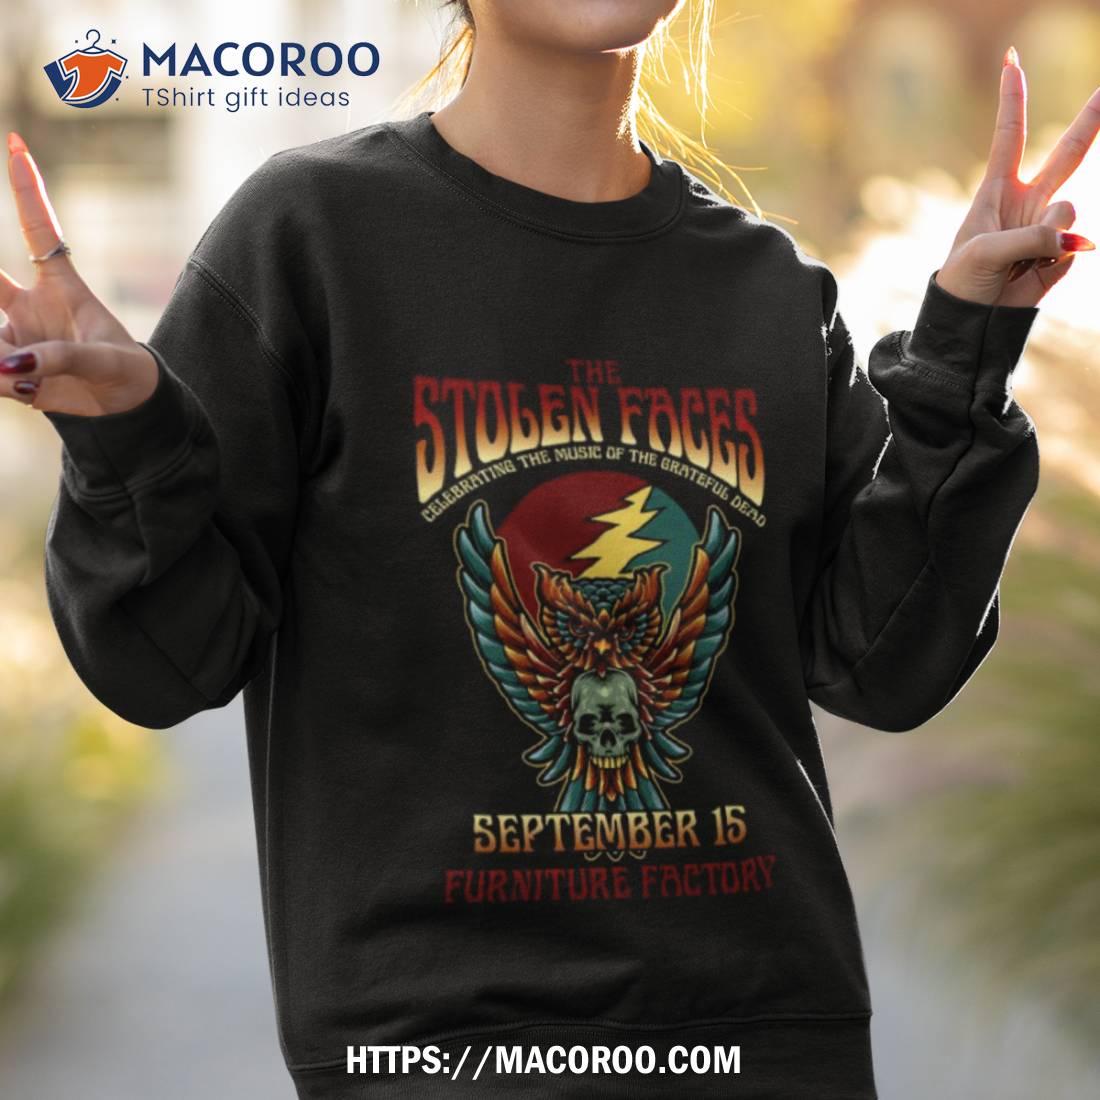 Clothing Fashion Legendusashirt - The Stolen Faces Celebrating The Music Of  The Grateful Dead September 15 Furniture Factory T-shirt - Wendypremium News